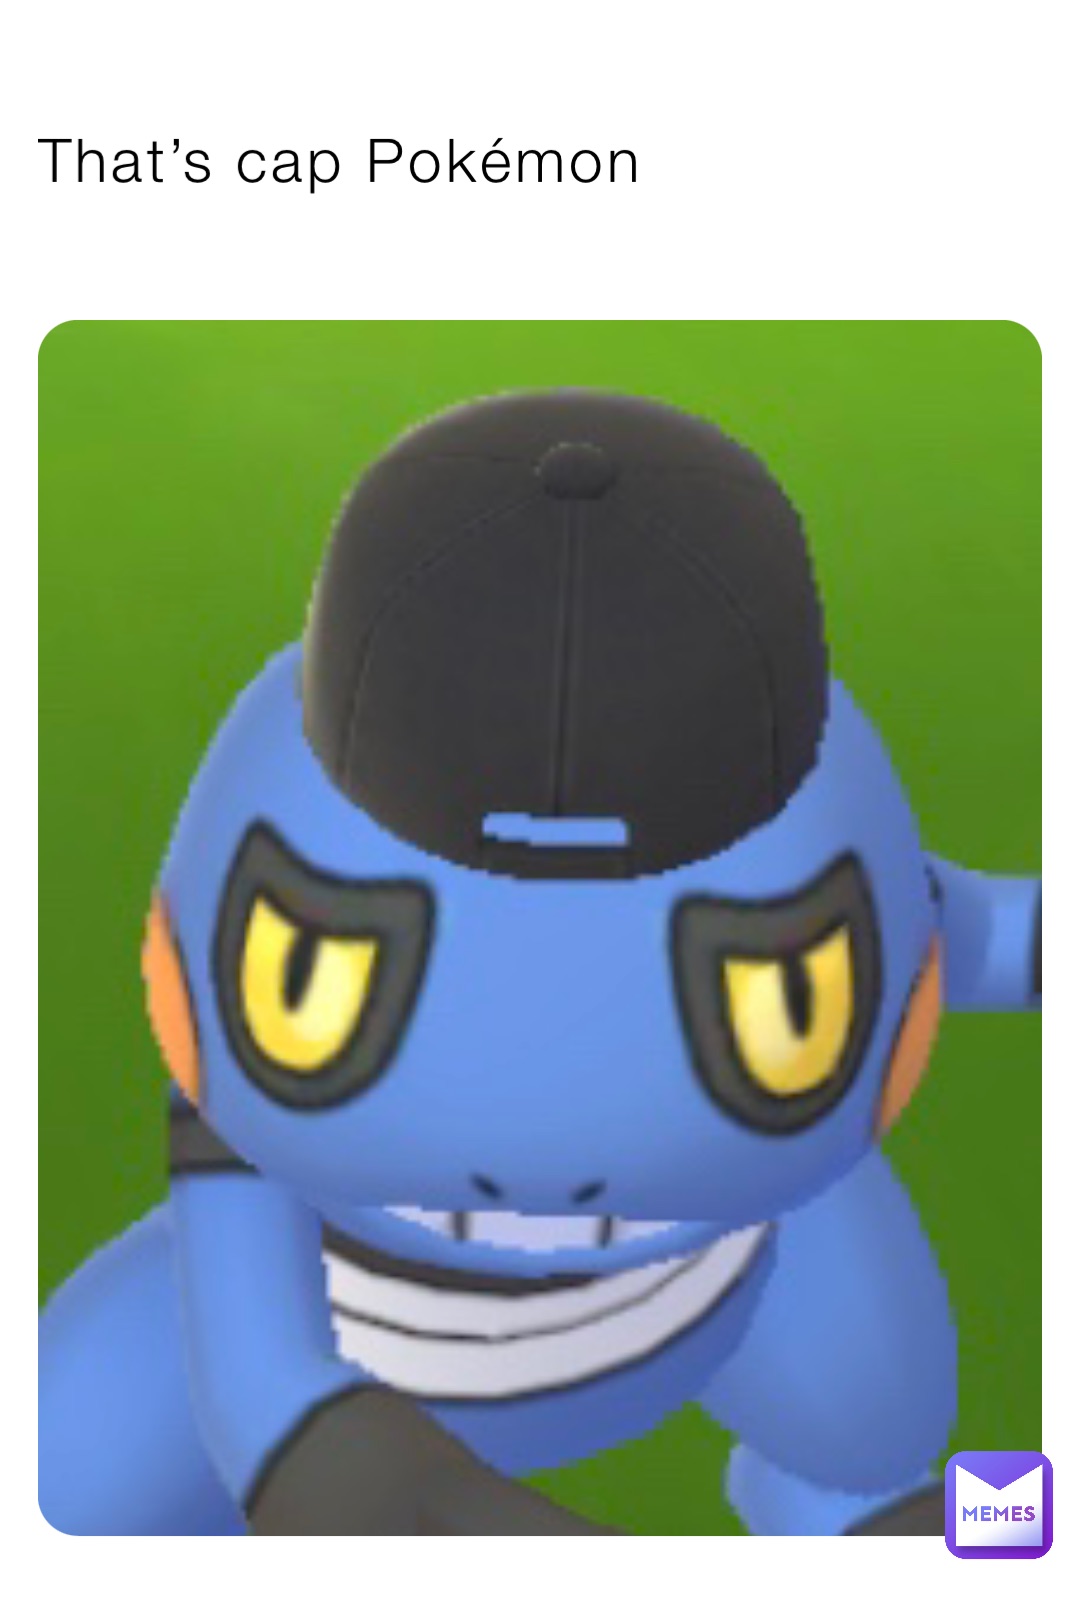 That’s cap Pokémon